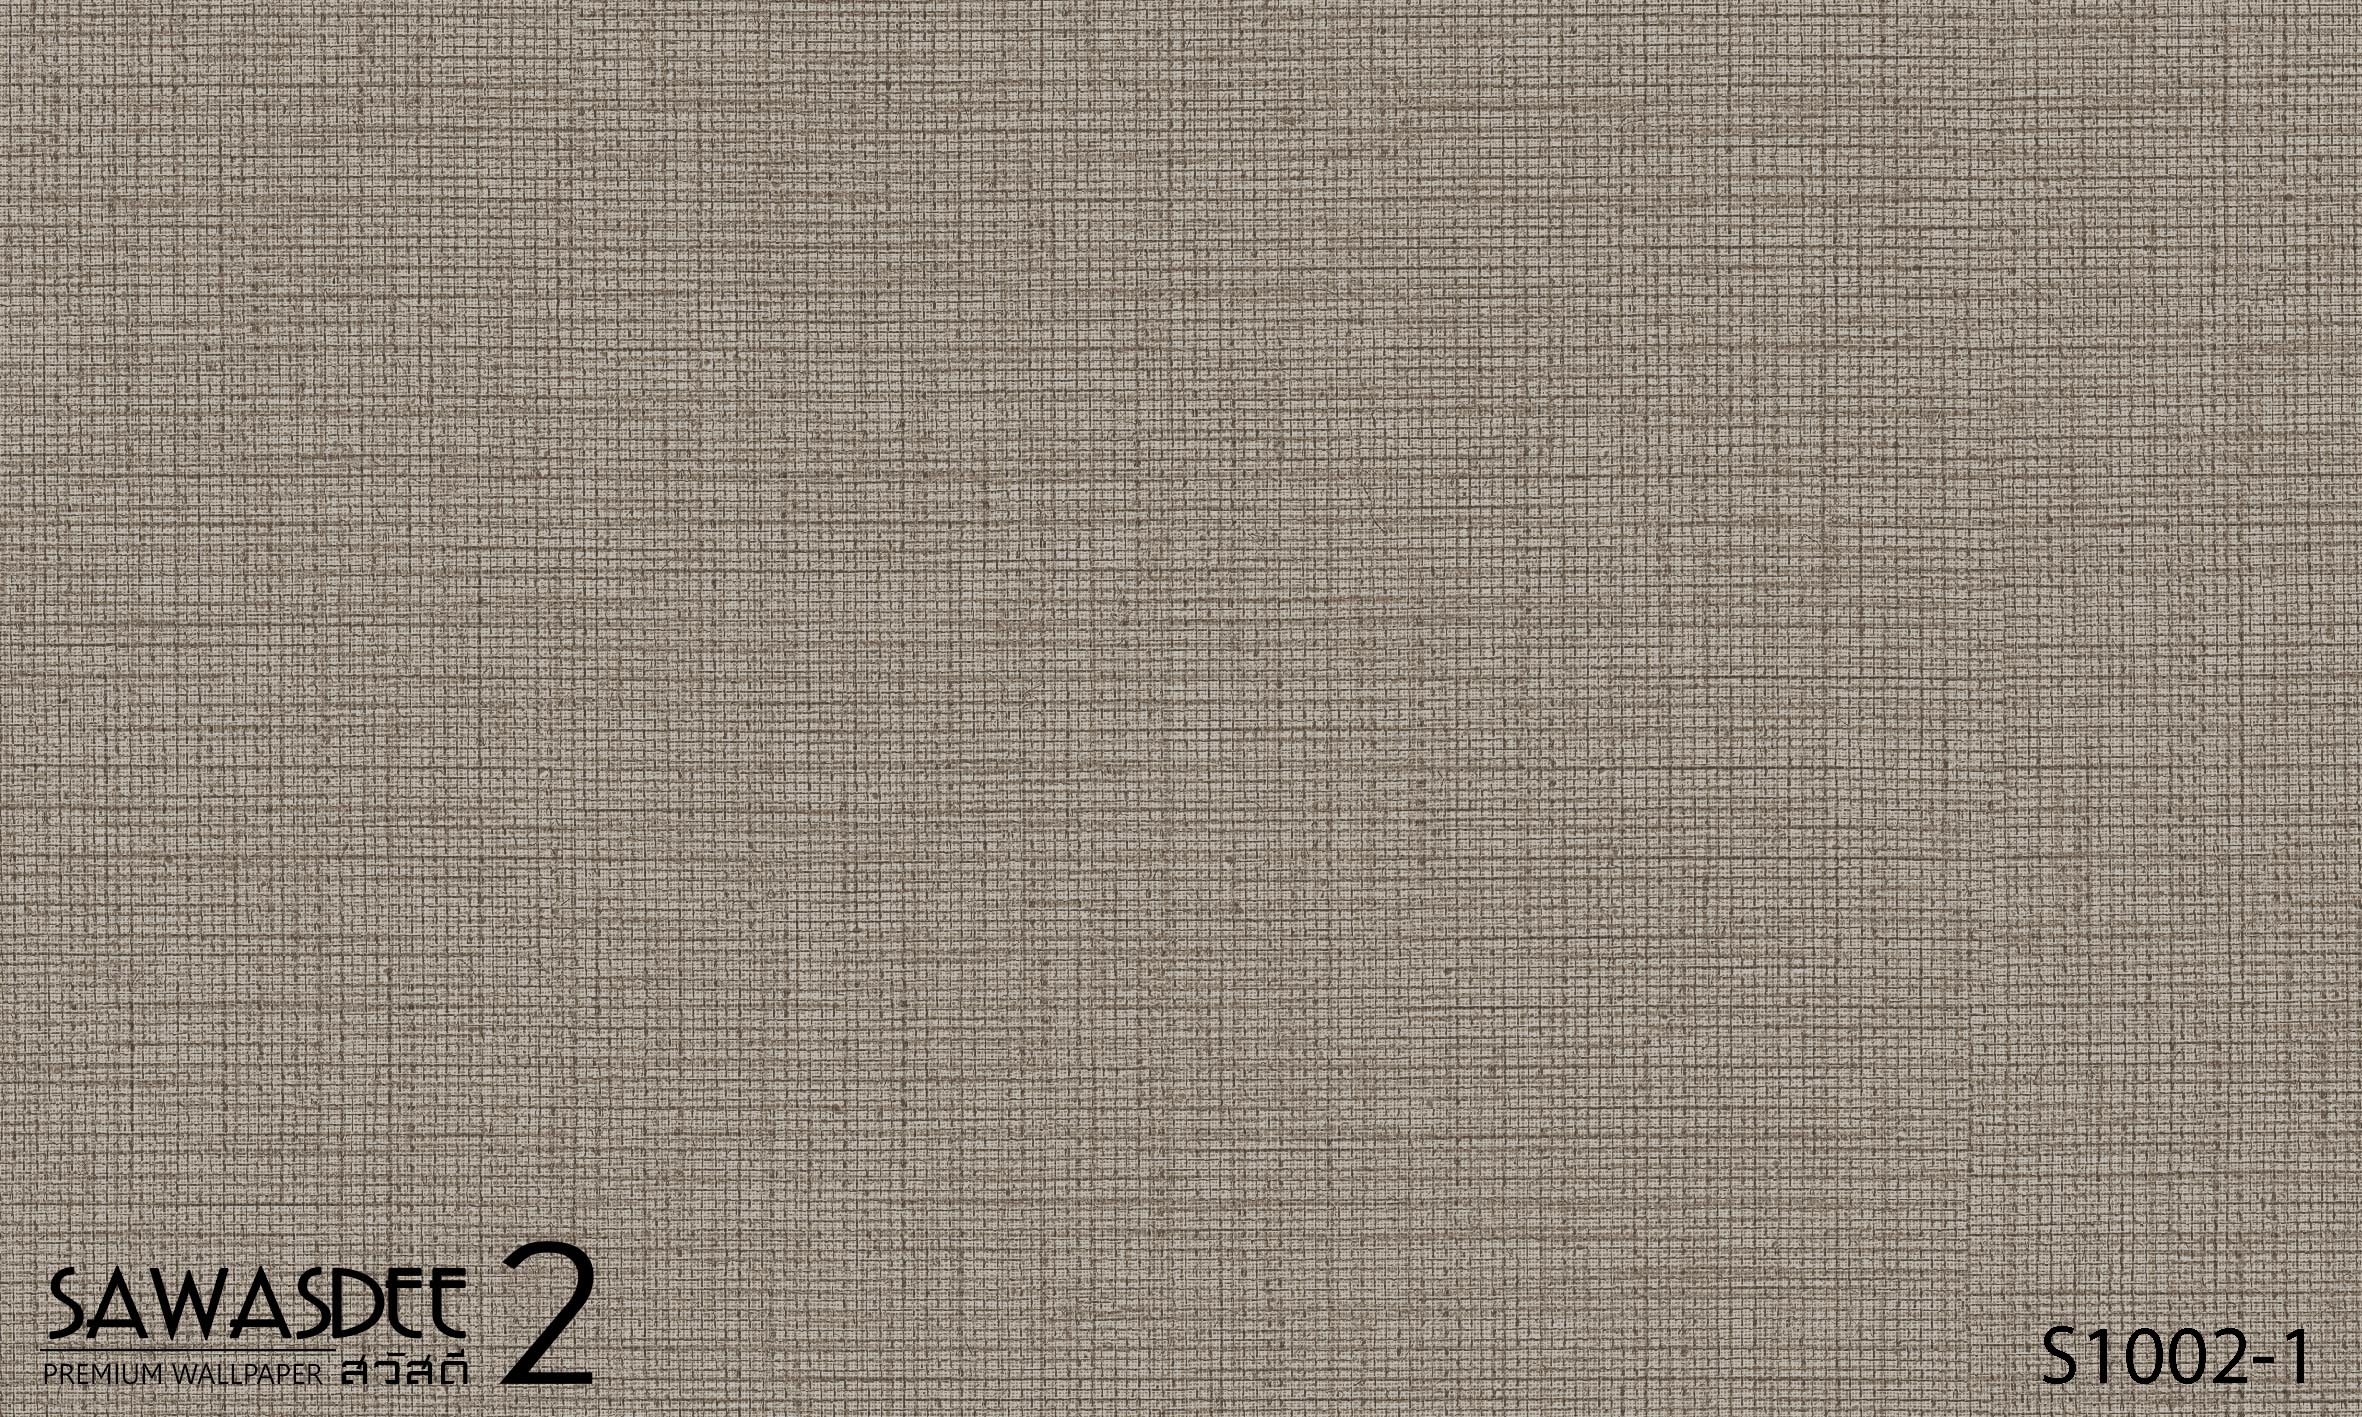 Wallpaper (SAWASDEE 2) S1002-1